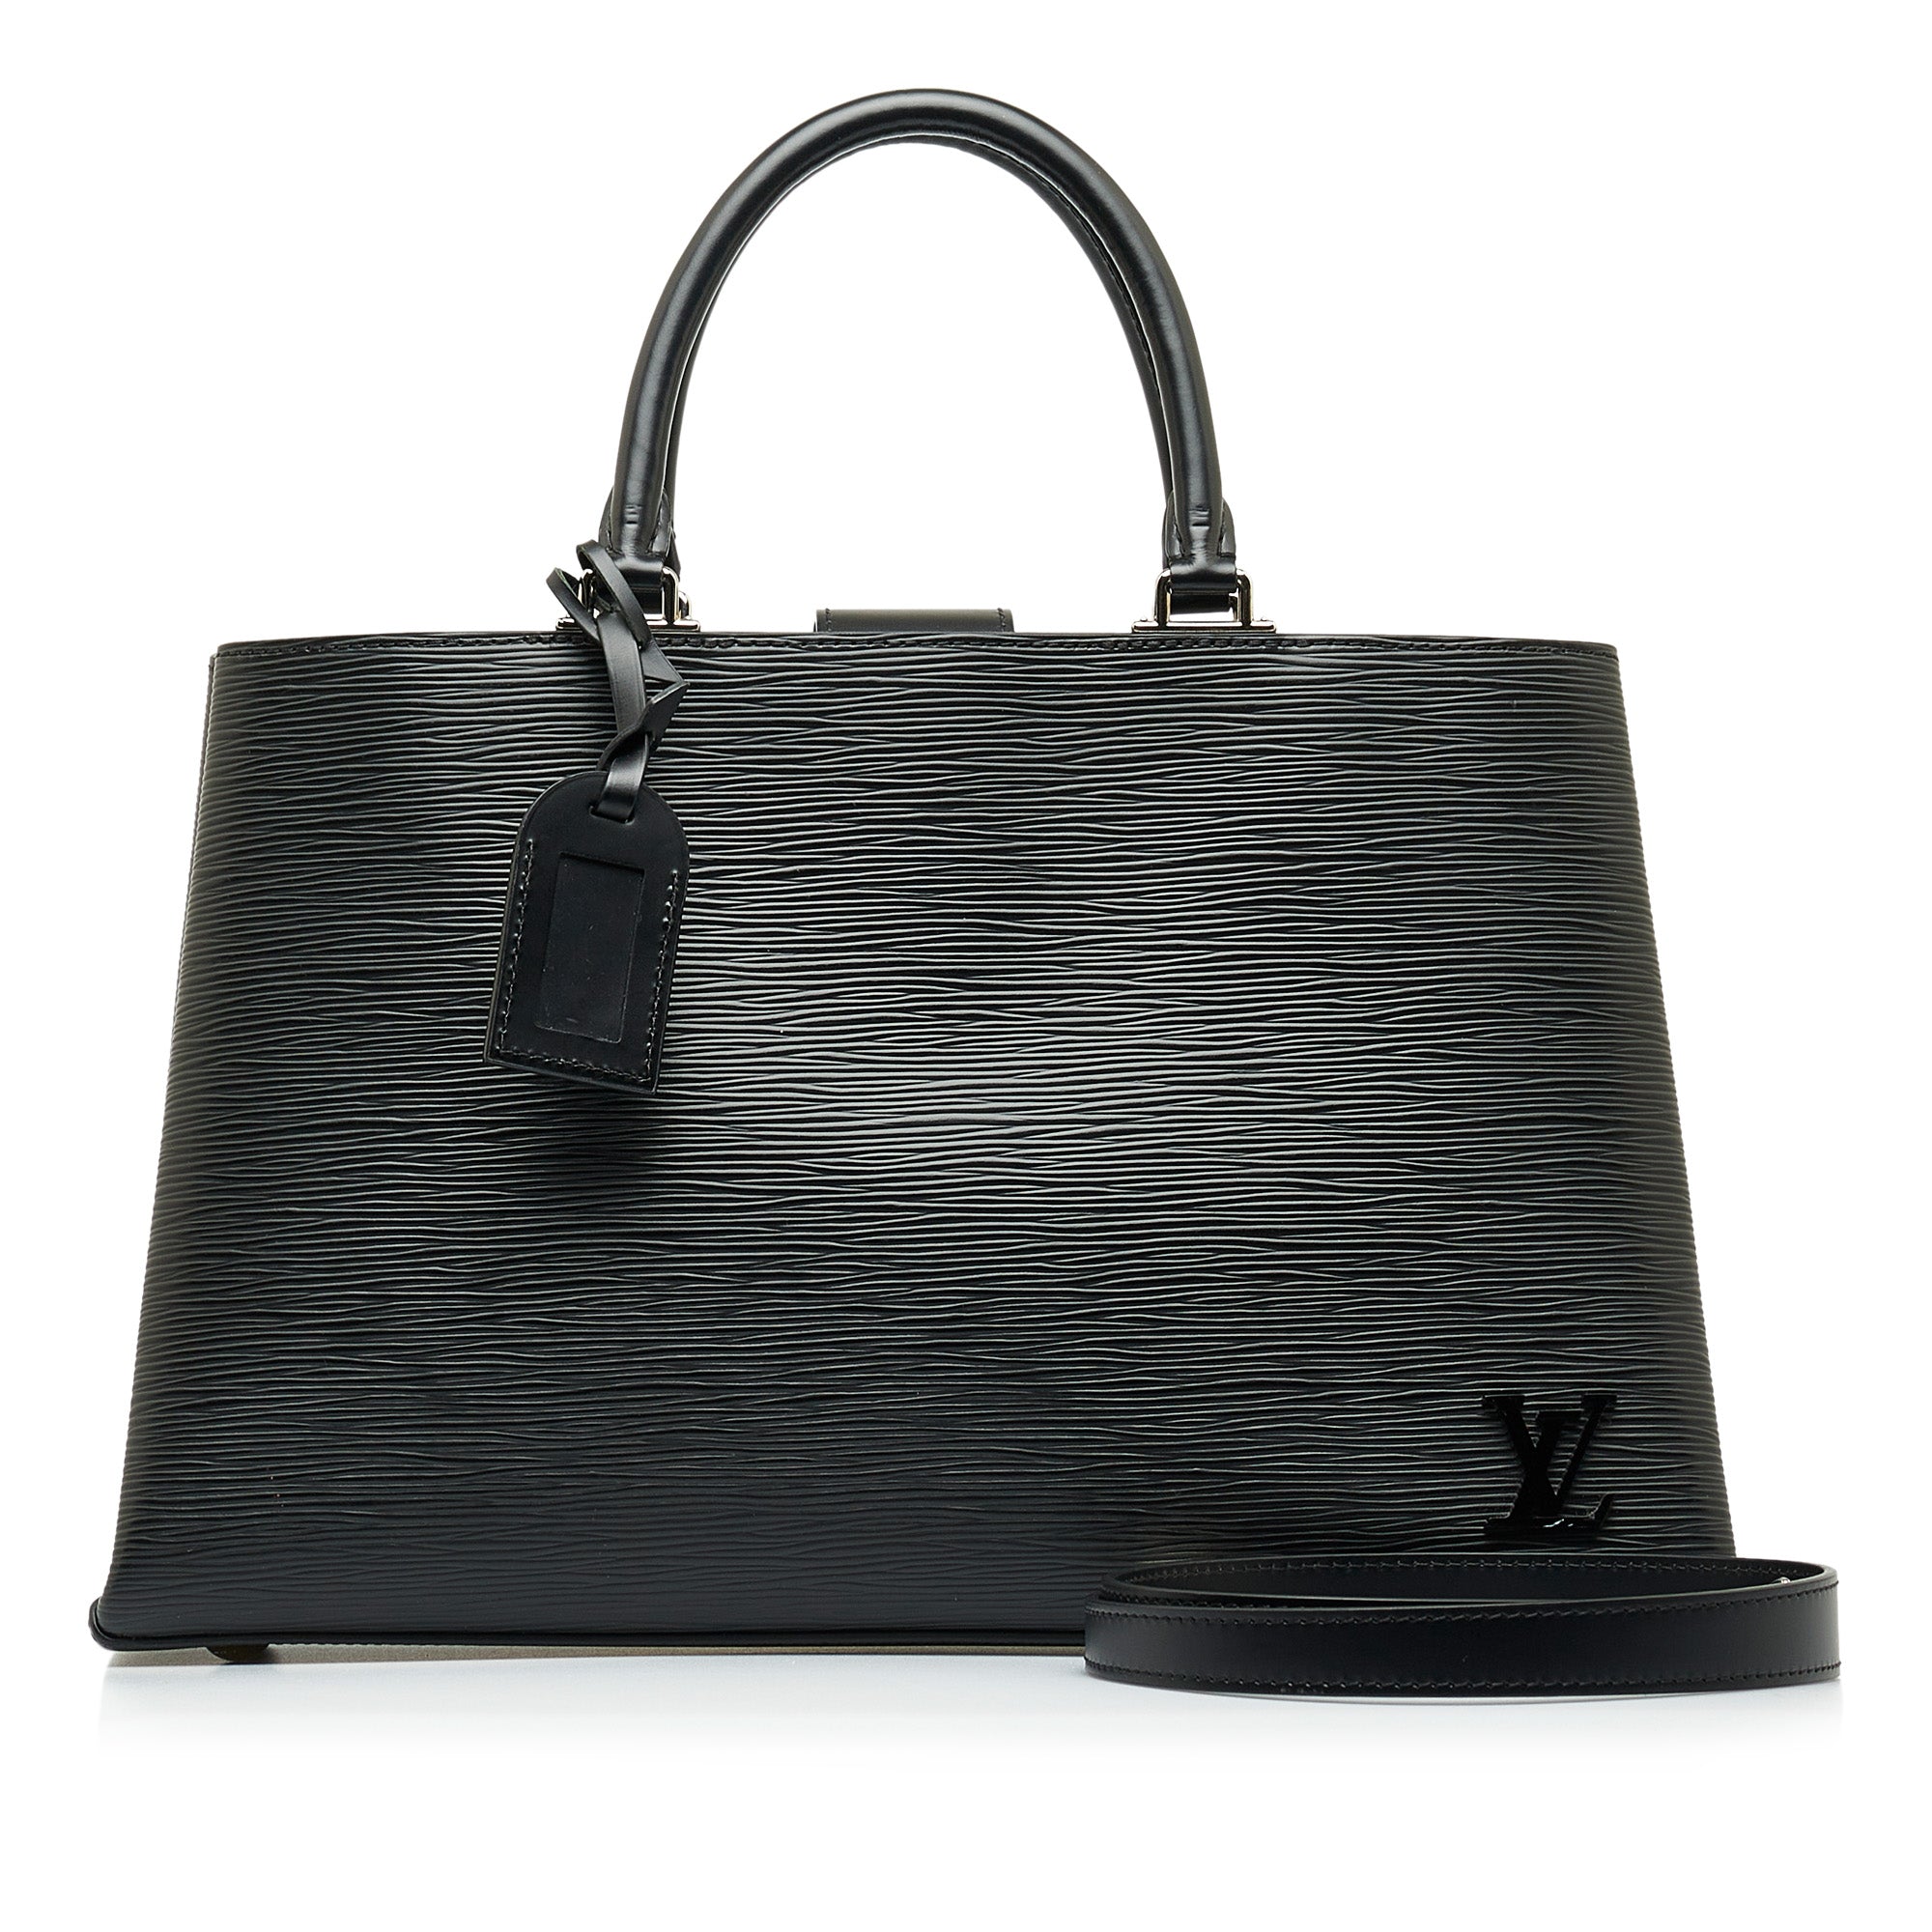 Louis Vuitton Saint-Louis hand-carried clutch in ebony checkered